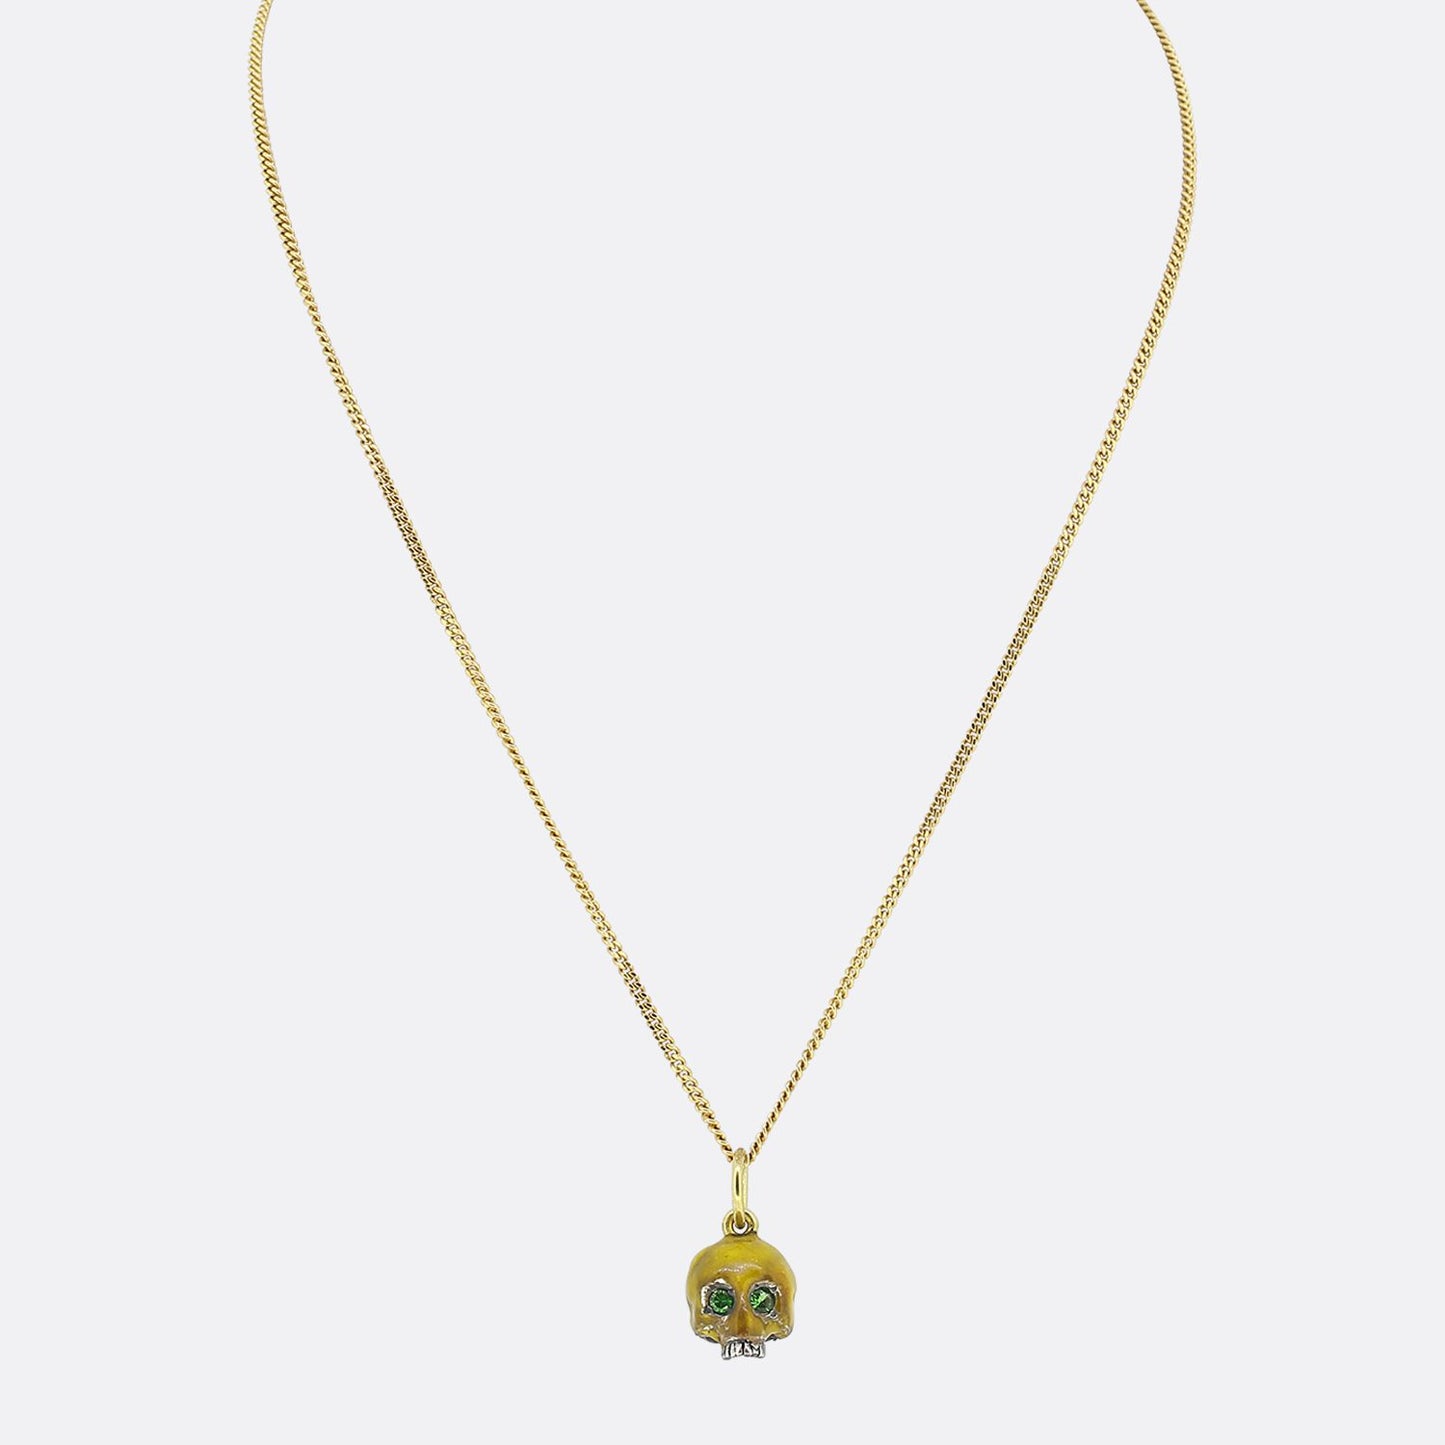 Gaetano Chiavetta Emerald and Yellow Enamel Skull Pendant Necklace